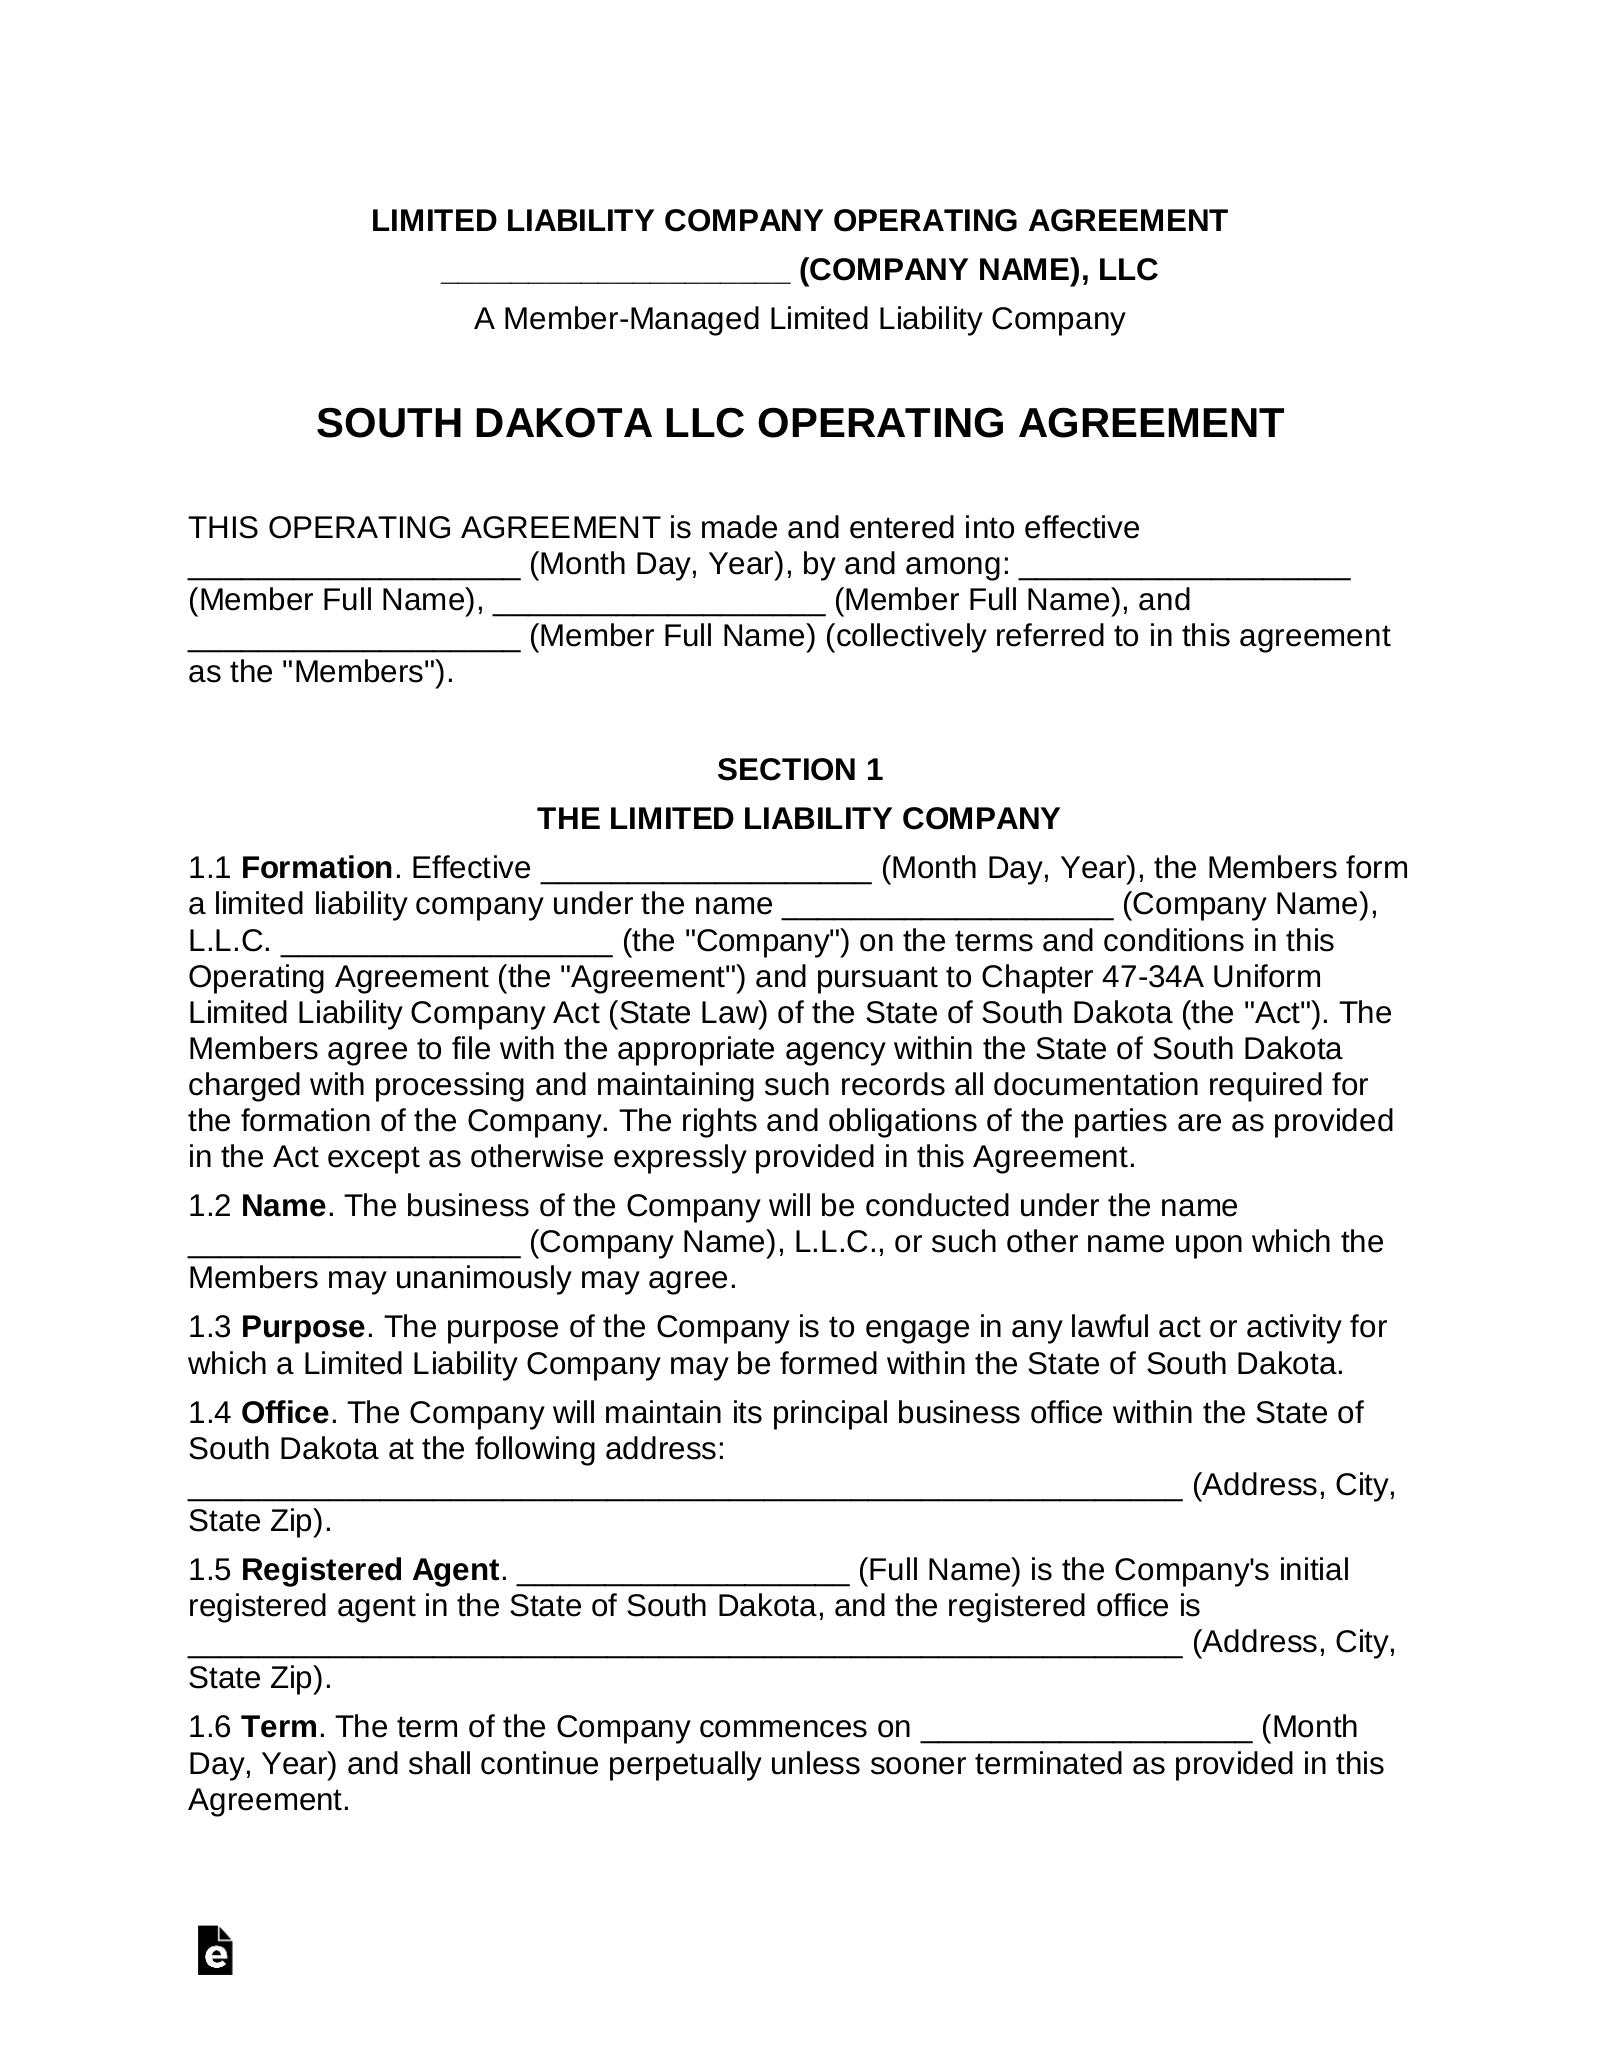 South Dakota Multi-Member LLC Operating Agreement Form